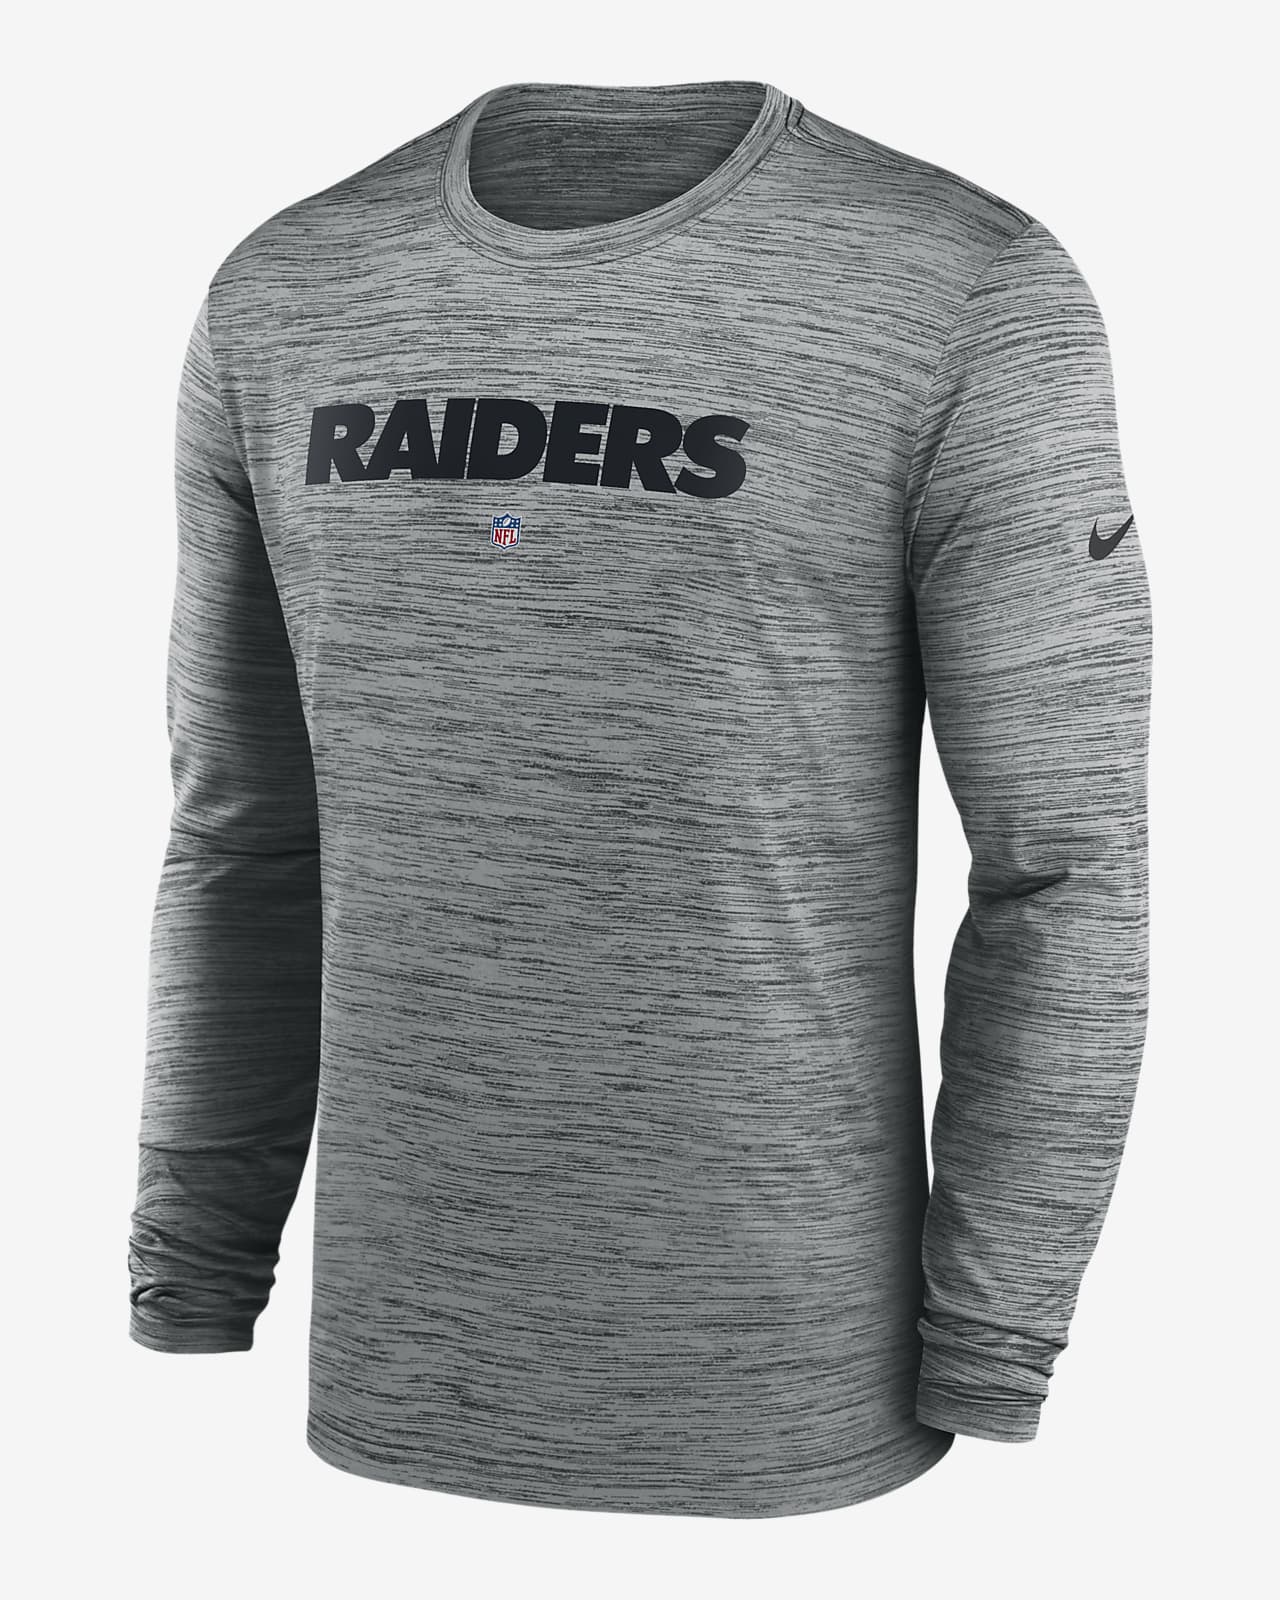 Nike Dri-FIT Sideline Velocity (NFL Las Vegas Raiders) Men's Long-Sleeve T-Shirt